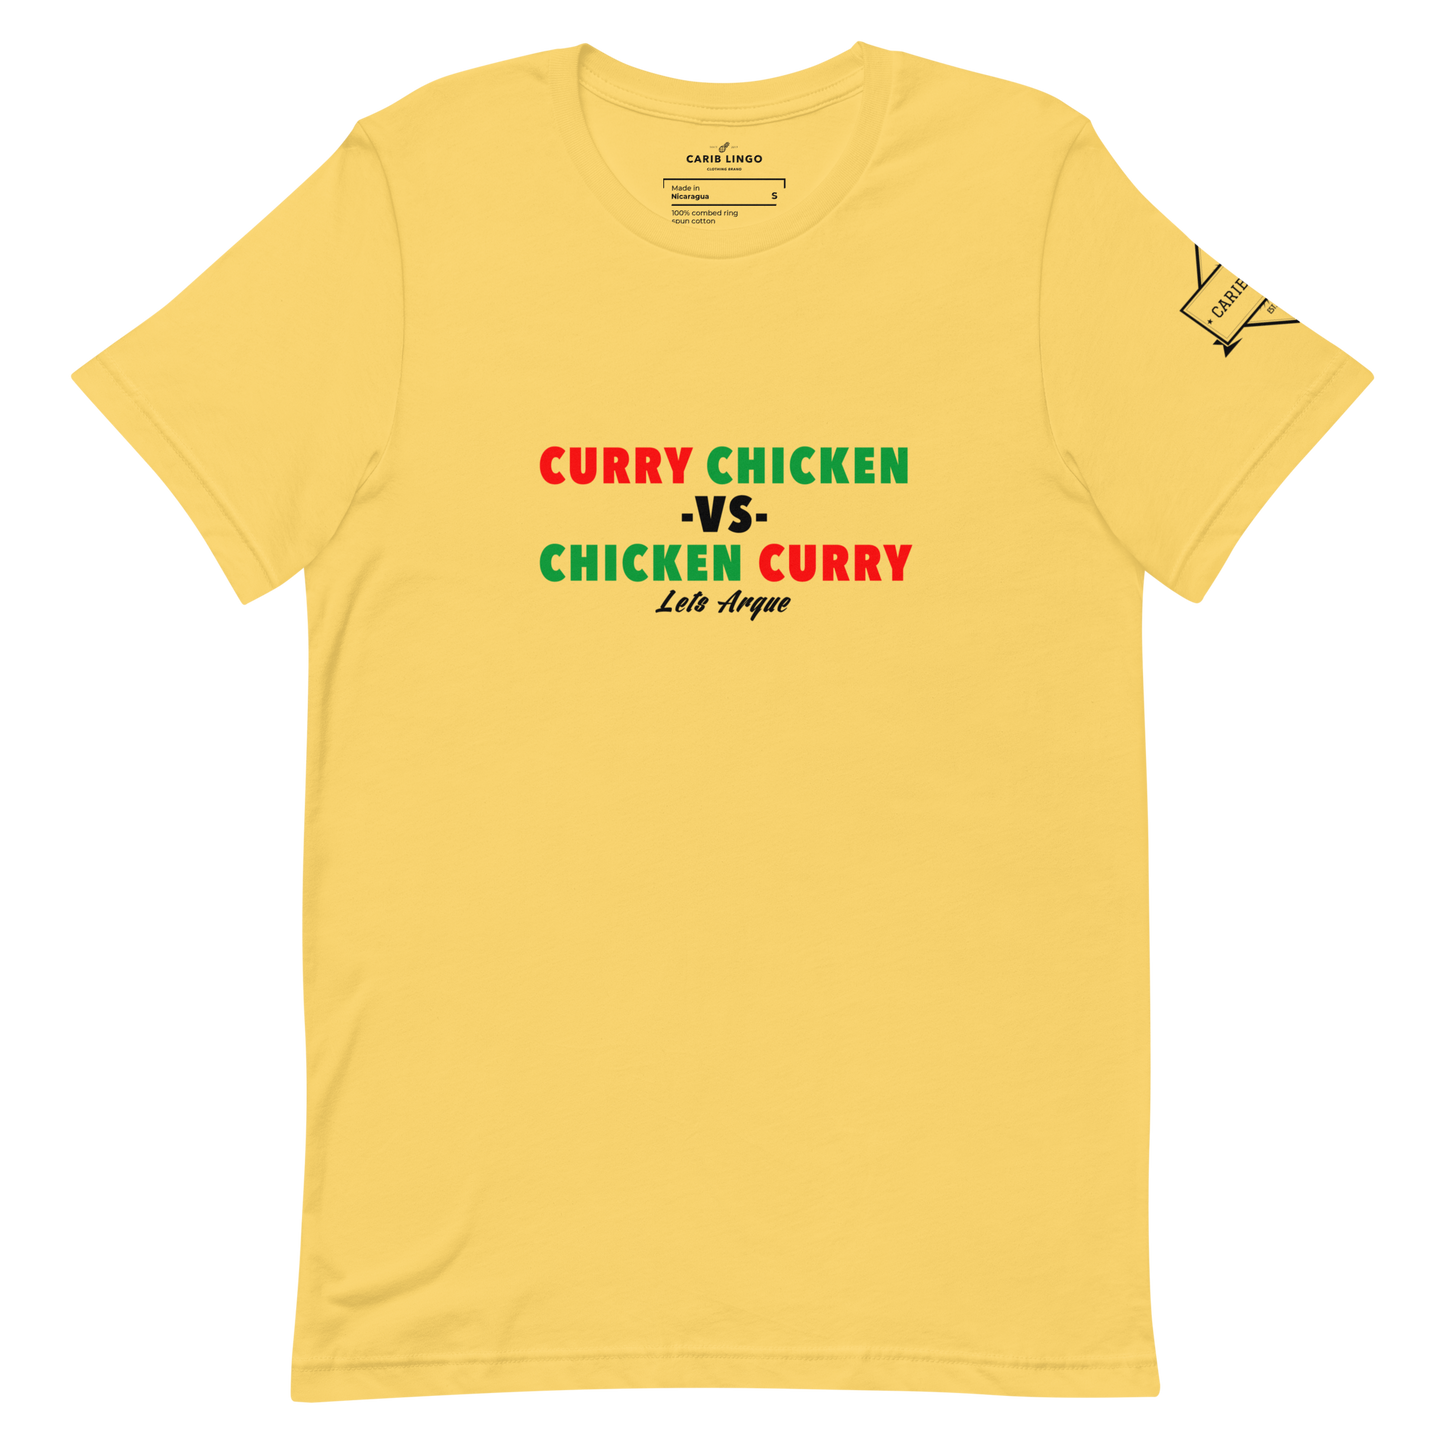 Curry Chicken -vs- Chicken Curry T-Shirt